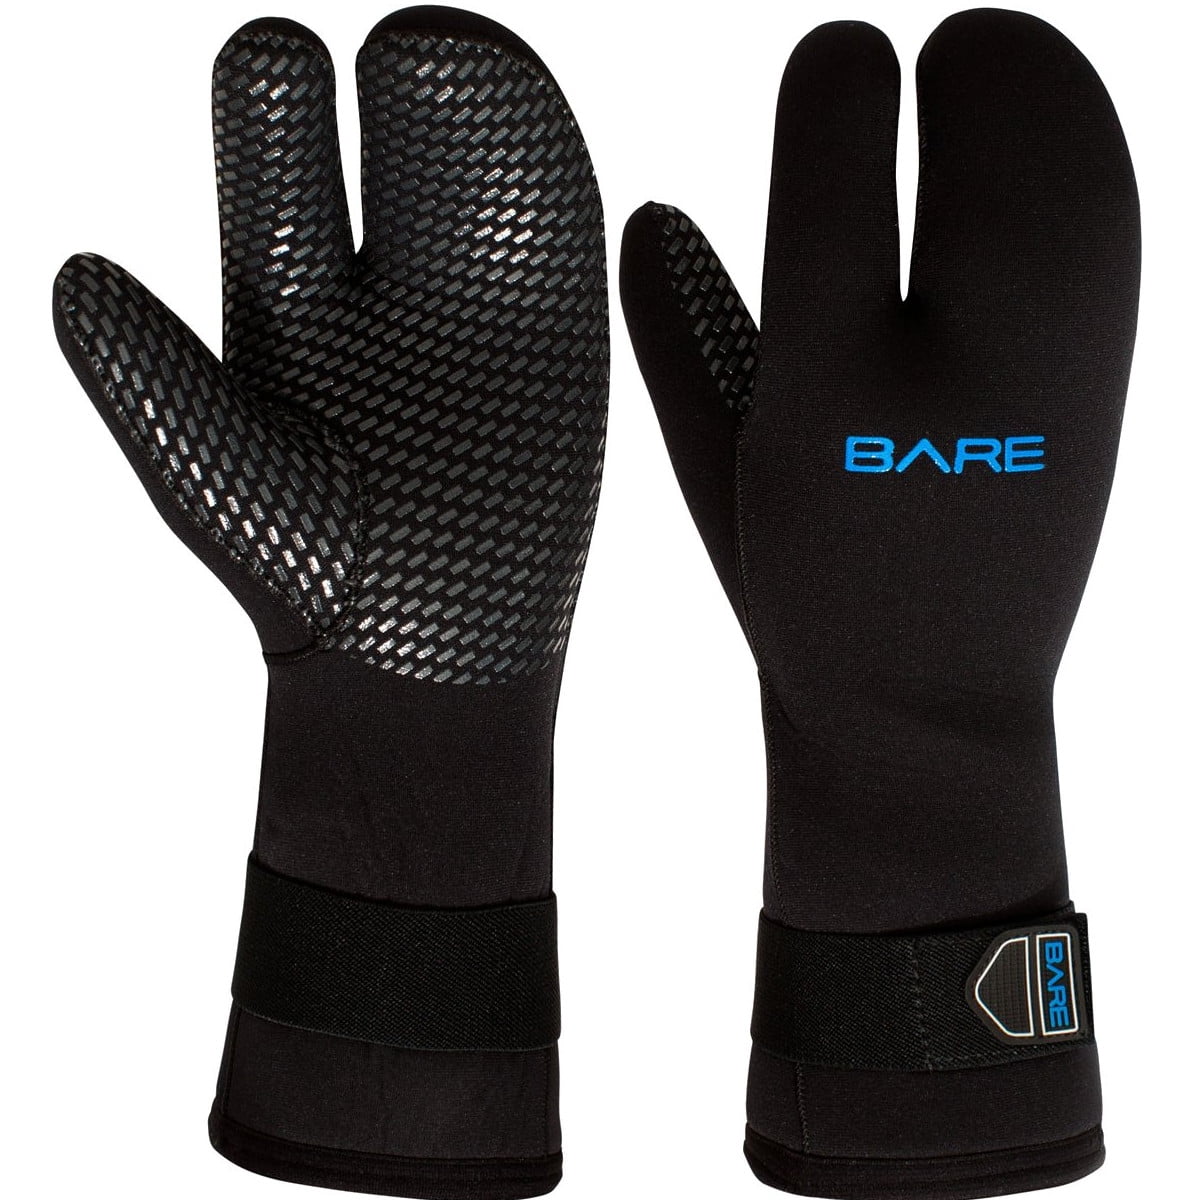 BARE 7mm 3 finger mitts/gloves/brand new/size X-large 